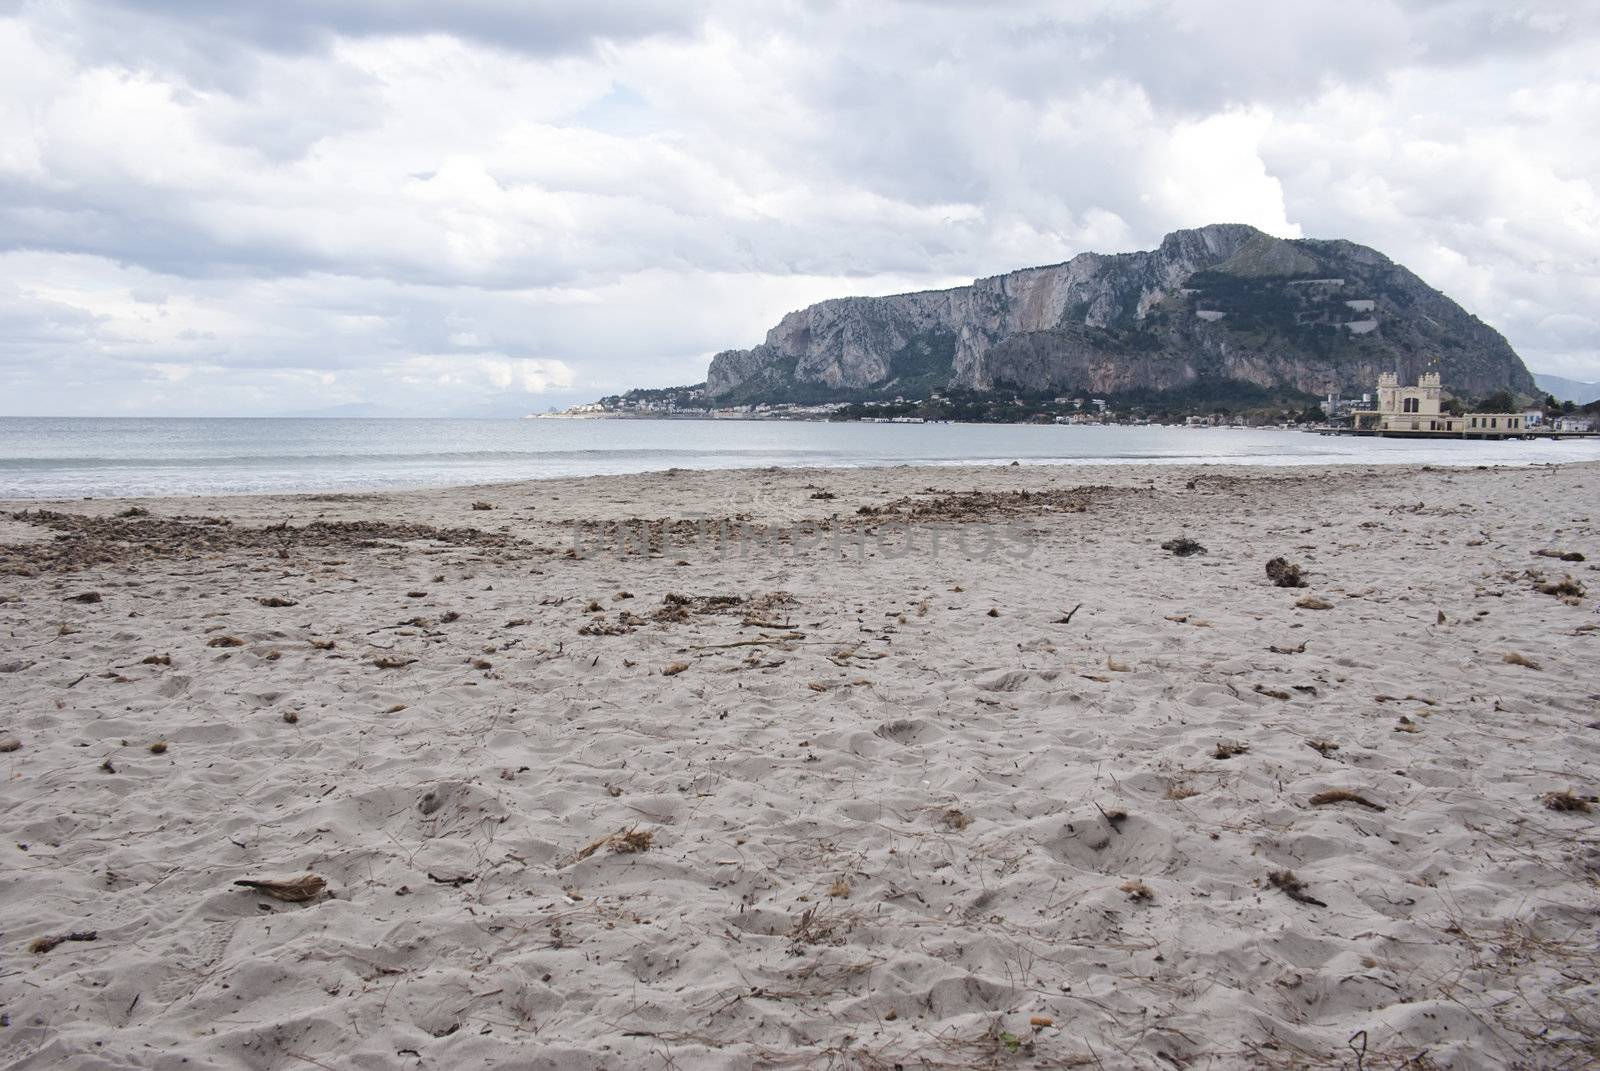 Beach of Mondello, Palermo, Sicily by gandolfocannatella